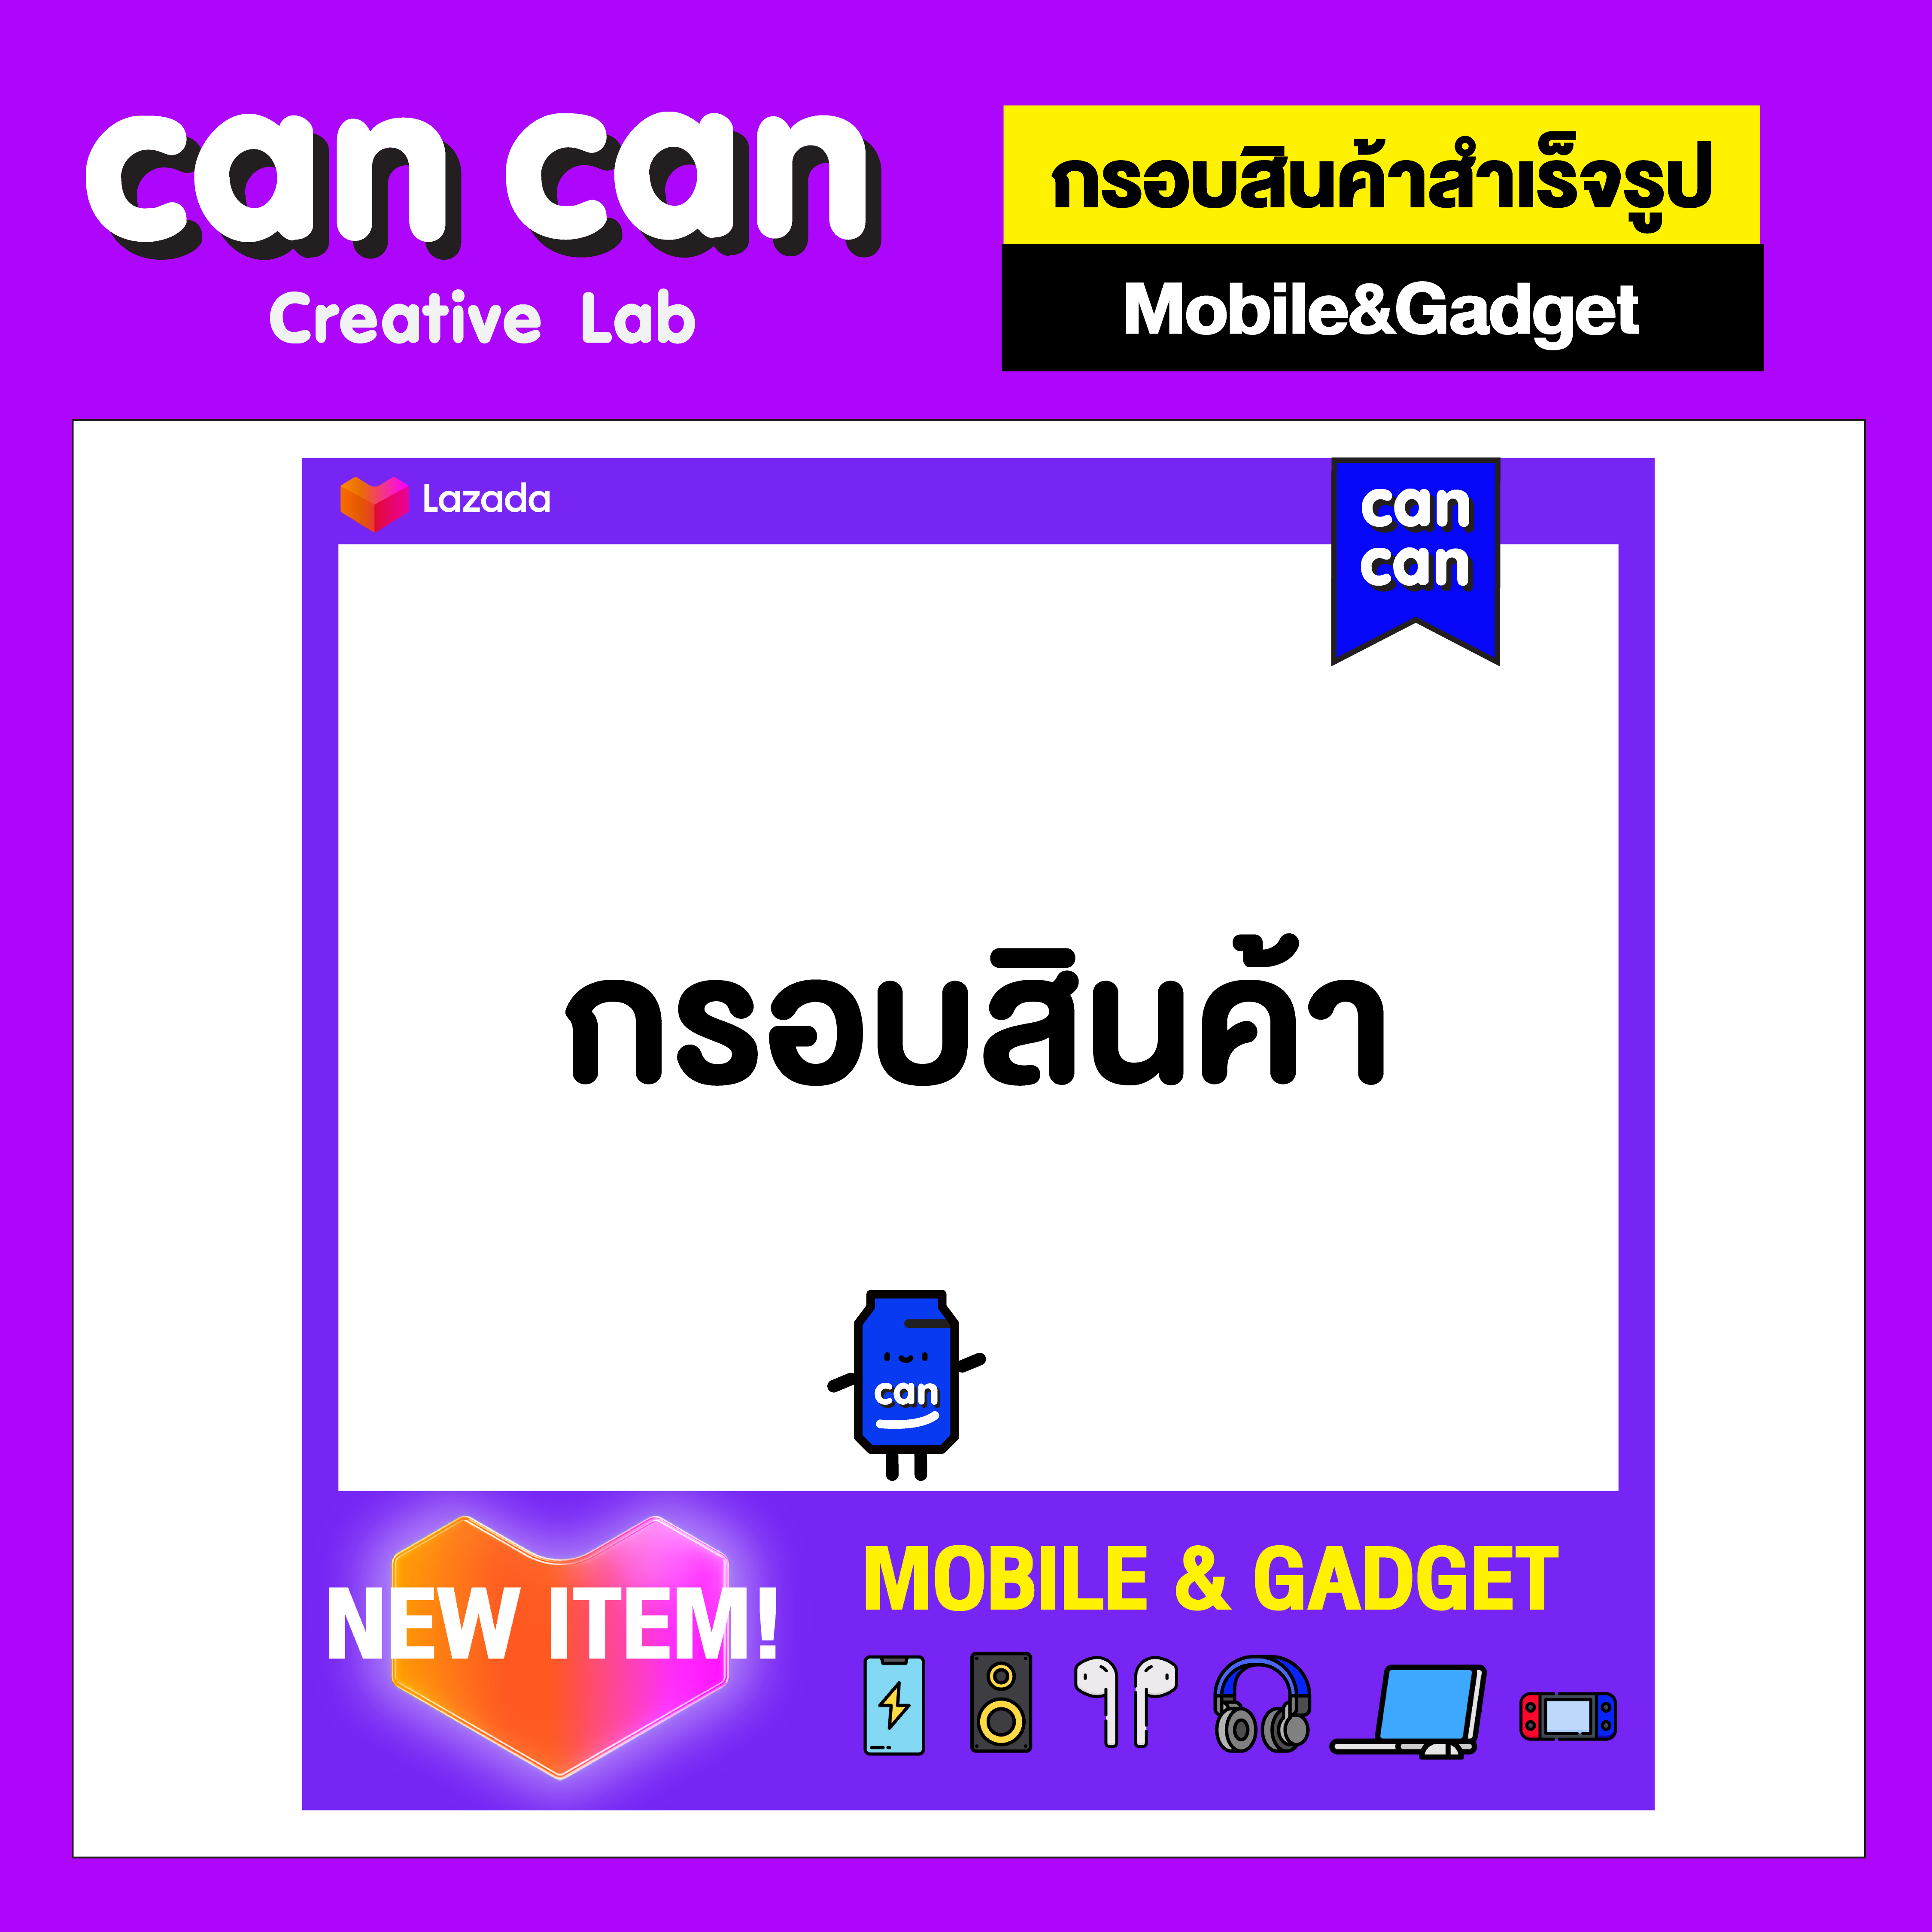 CanCan Creative Lab - กรอบสินค้า - Lazada : Mobile&Gadget  มือถือและแก็ดเก็ท  ราคาพิเศษ  (จัดส่งทางอีเมลทันทีใน 24 ชม.))